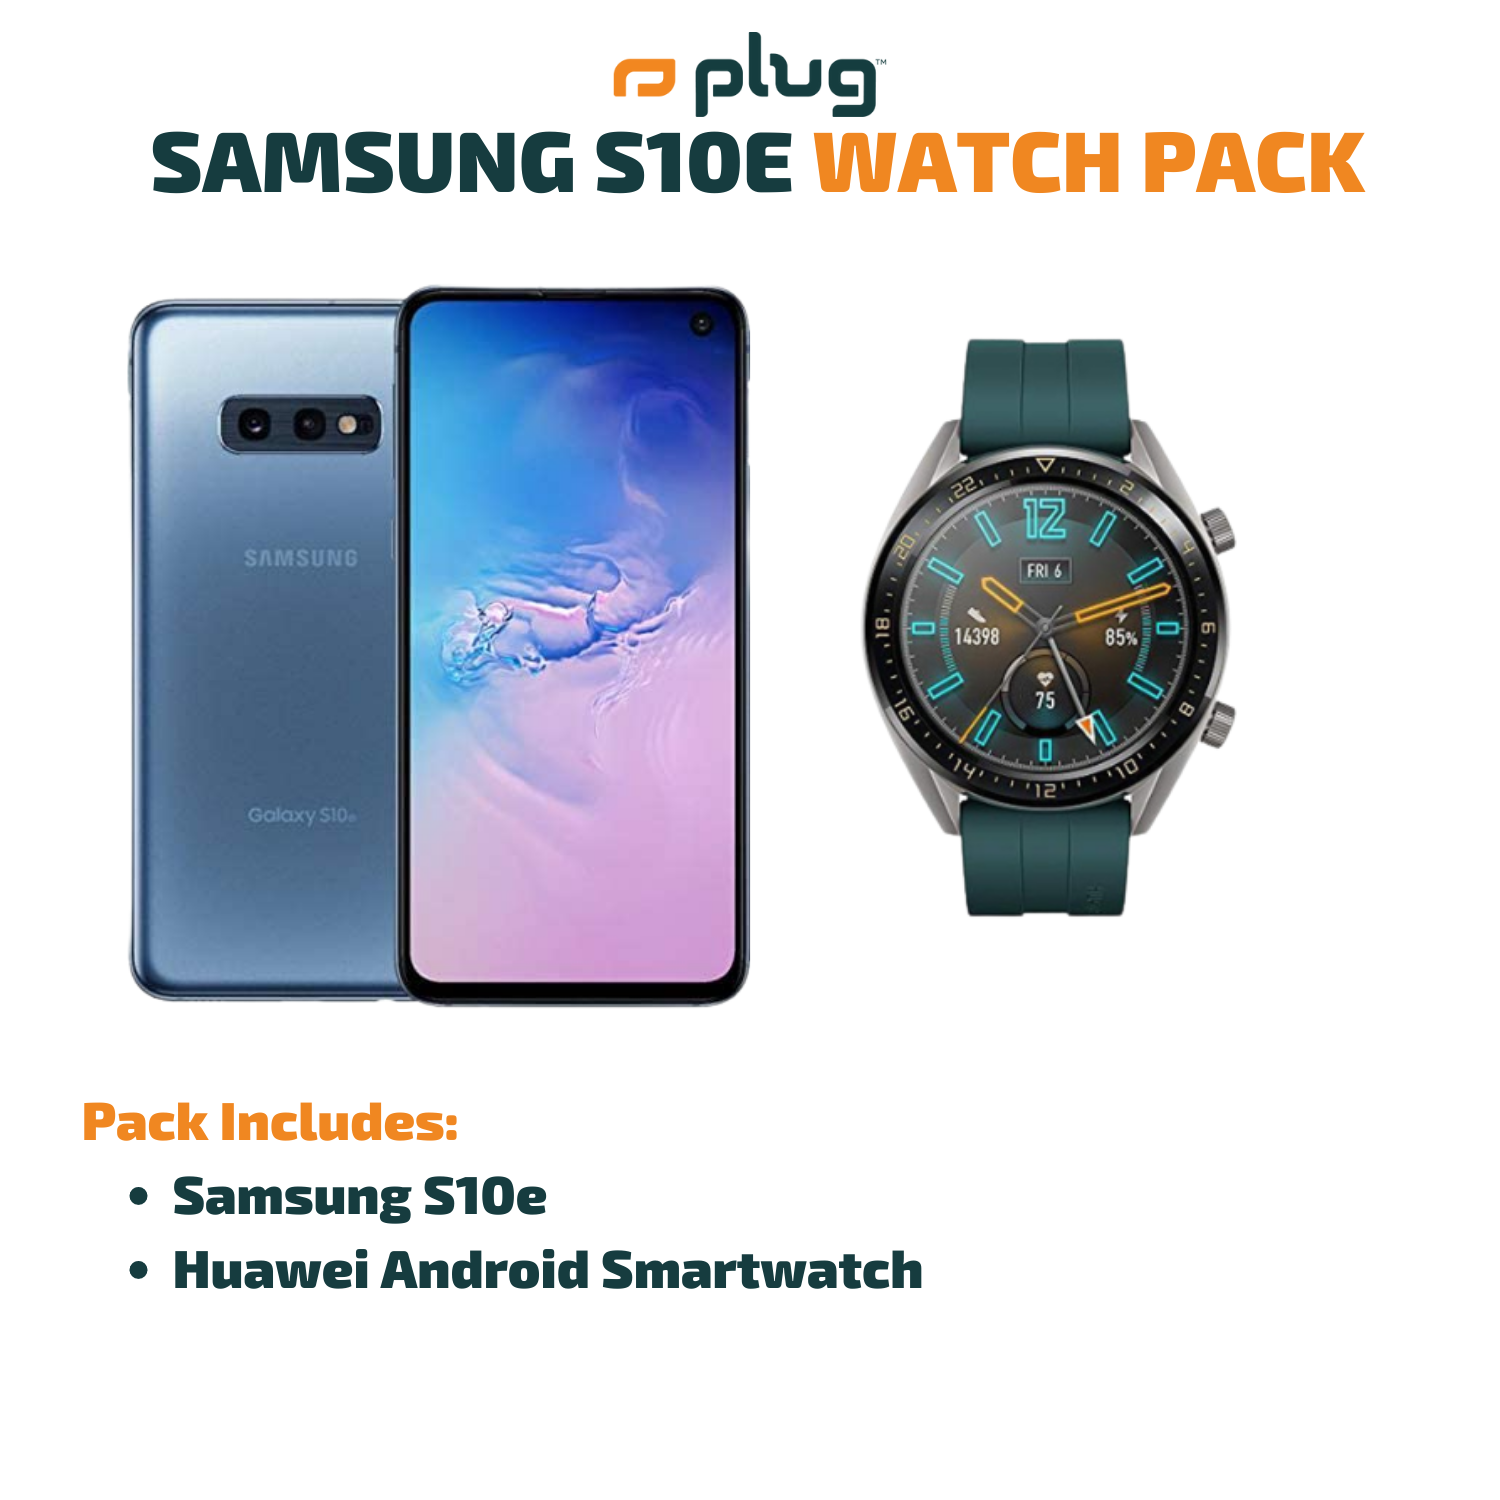 Samsung S10e + Watch Pack